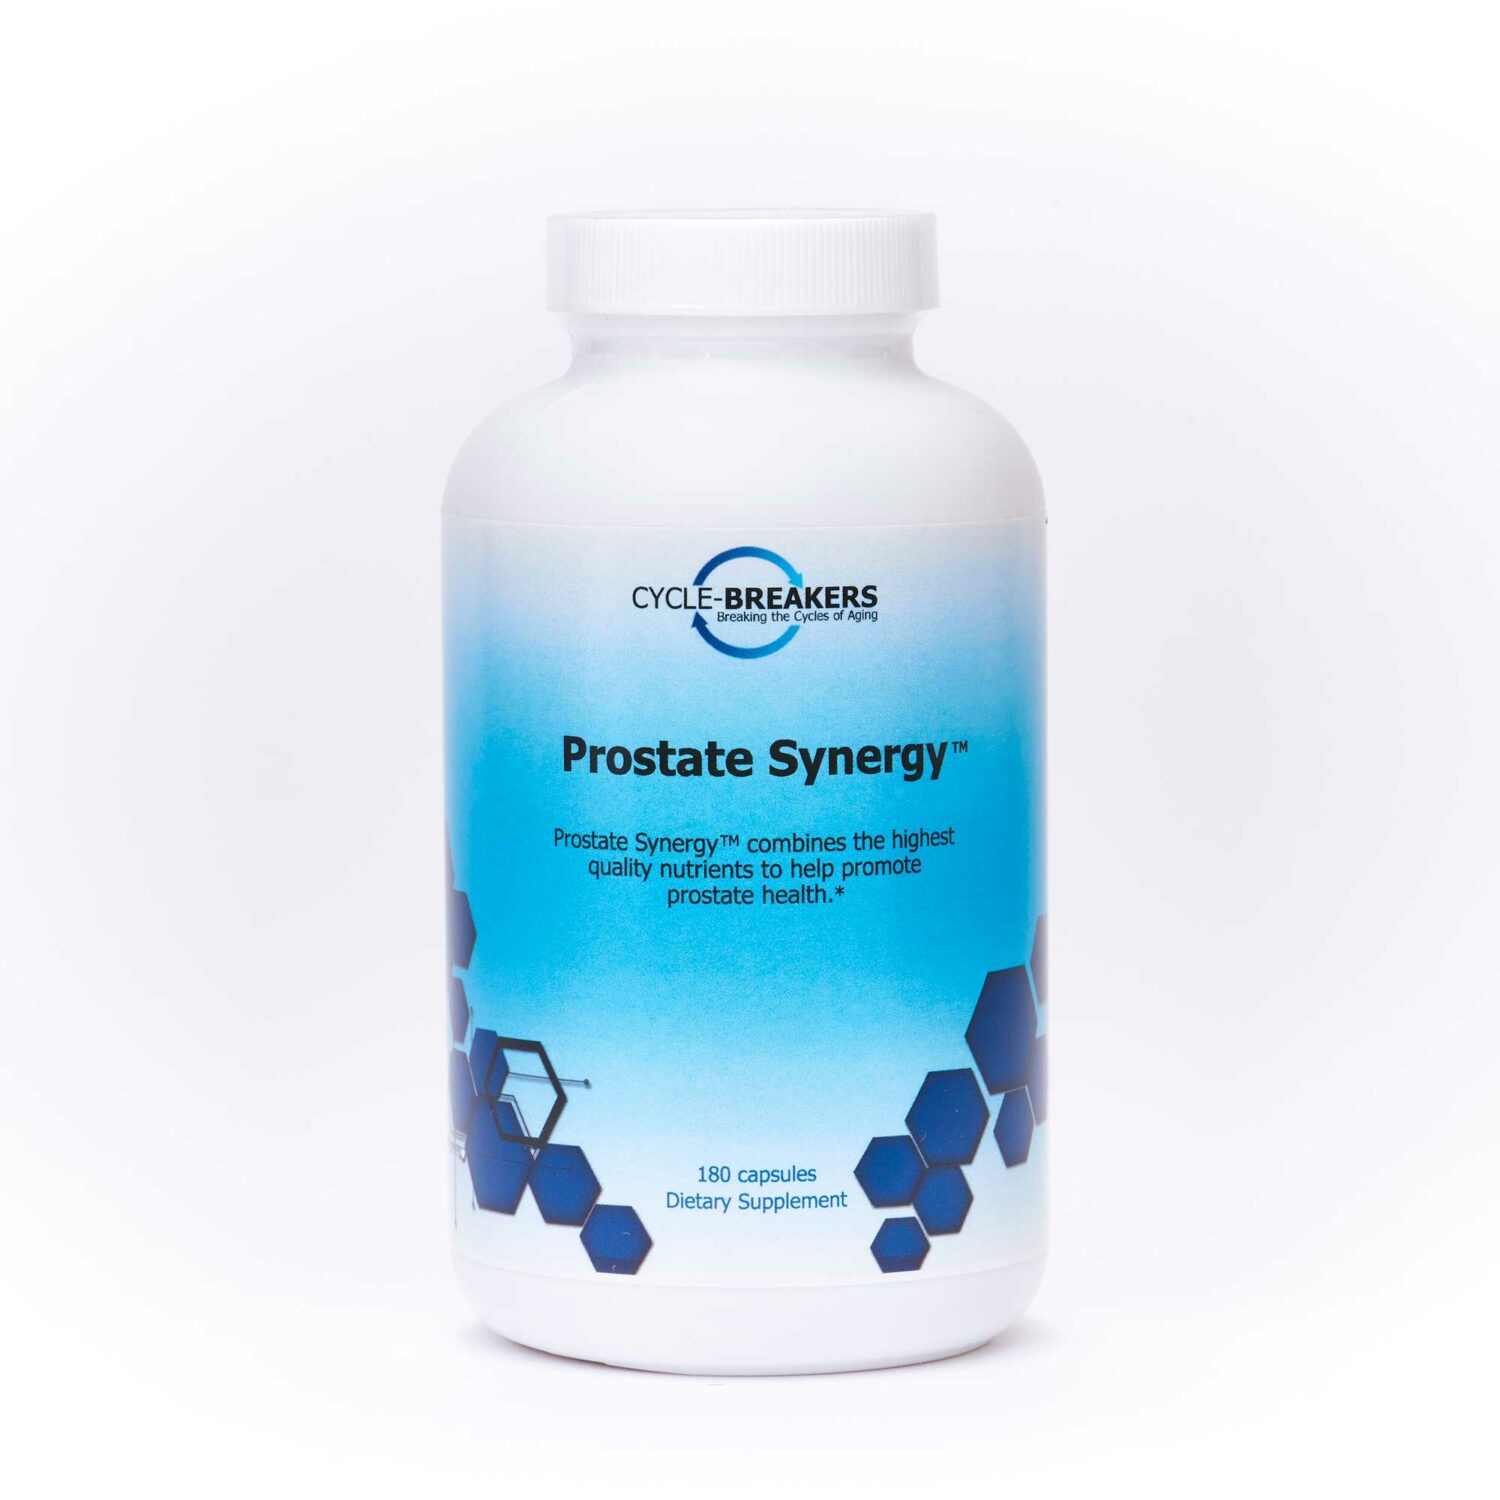 Prostate Synergy